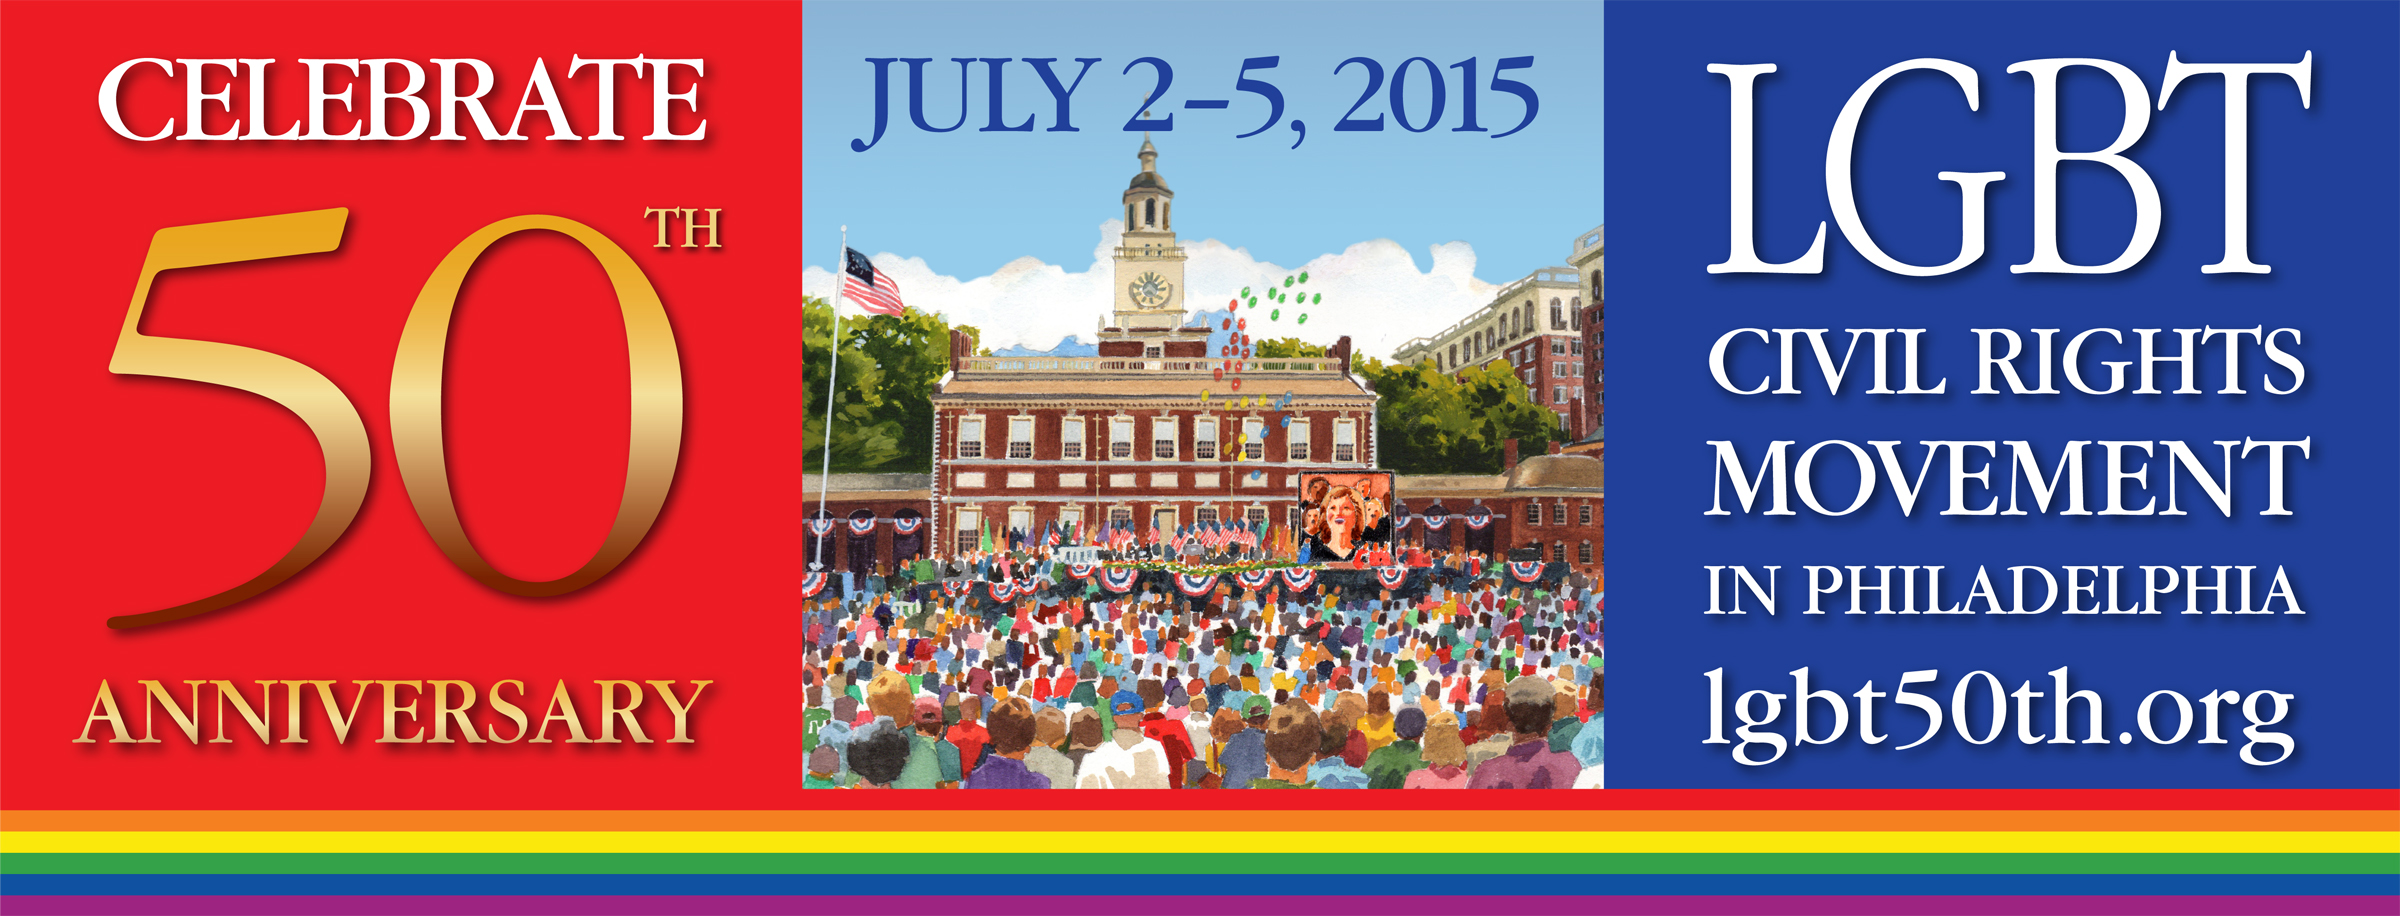 LGBT50th Anniversary Celebration July 4, 2015 Philadelphia